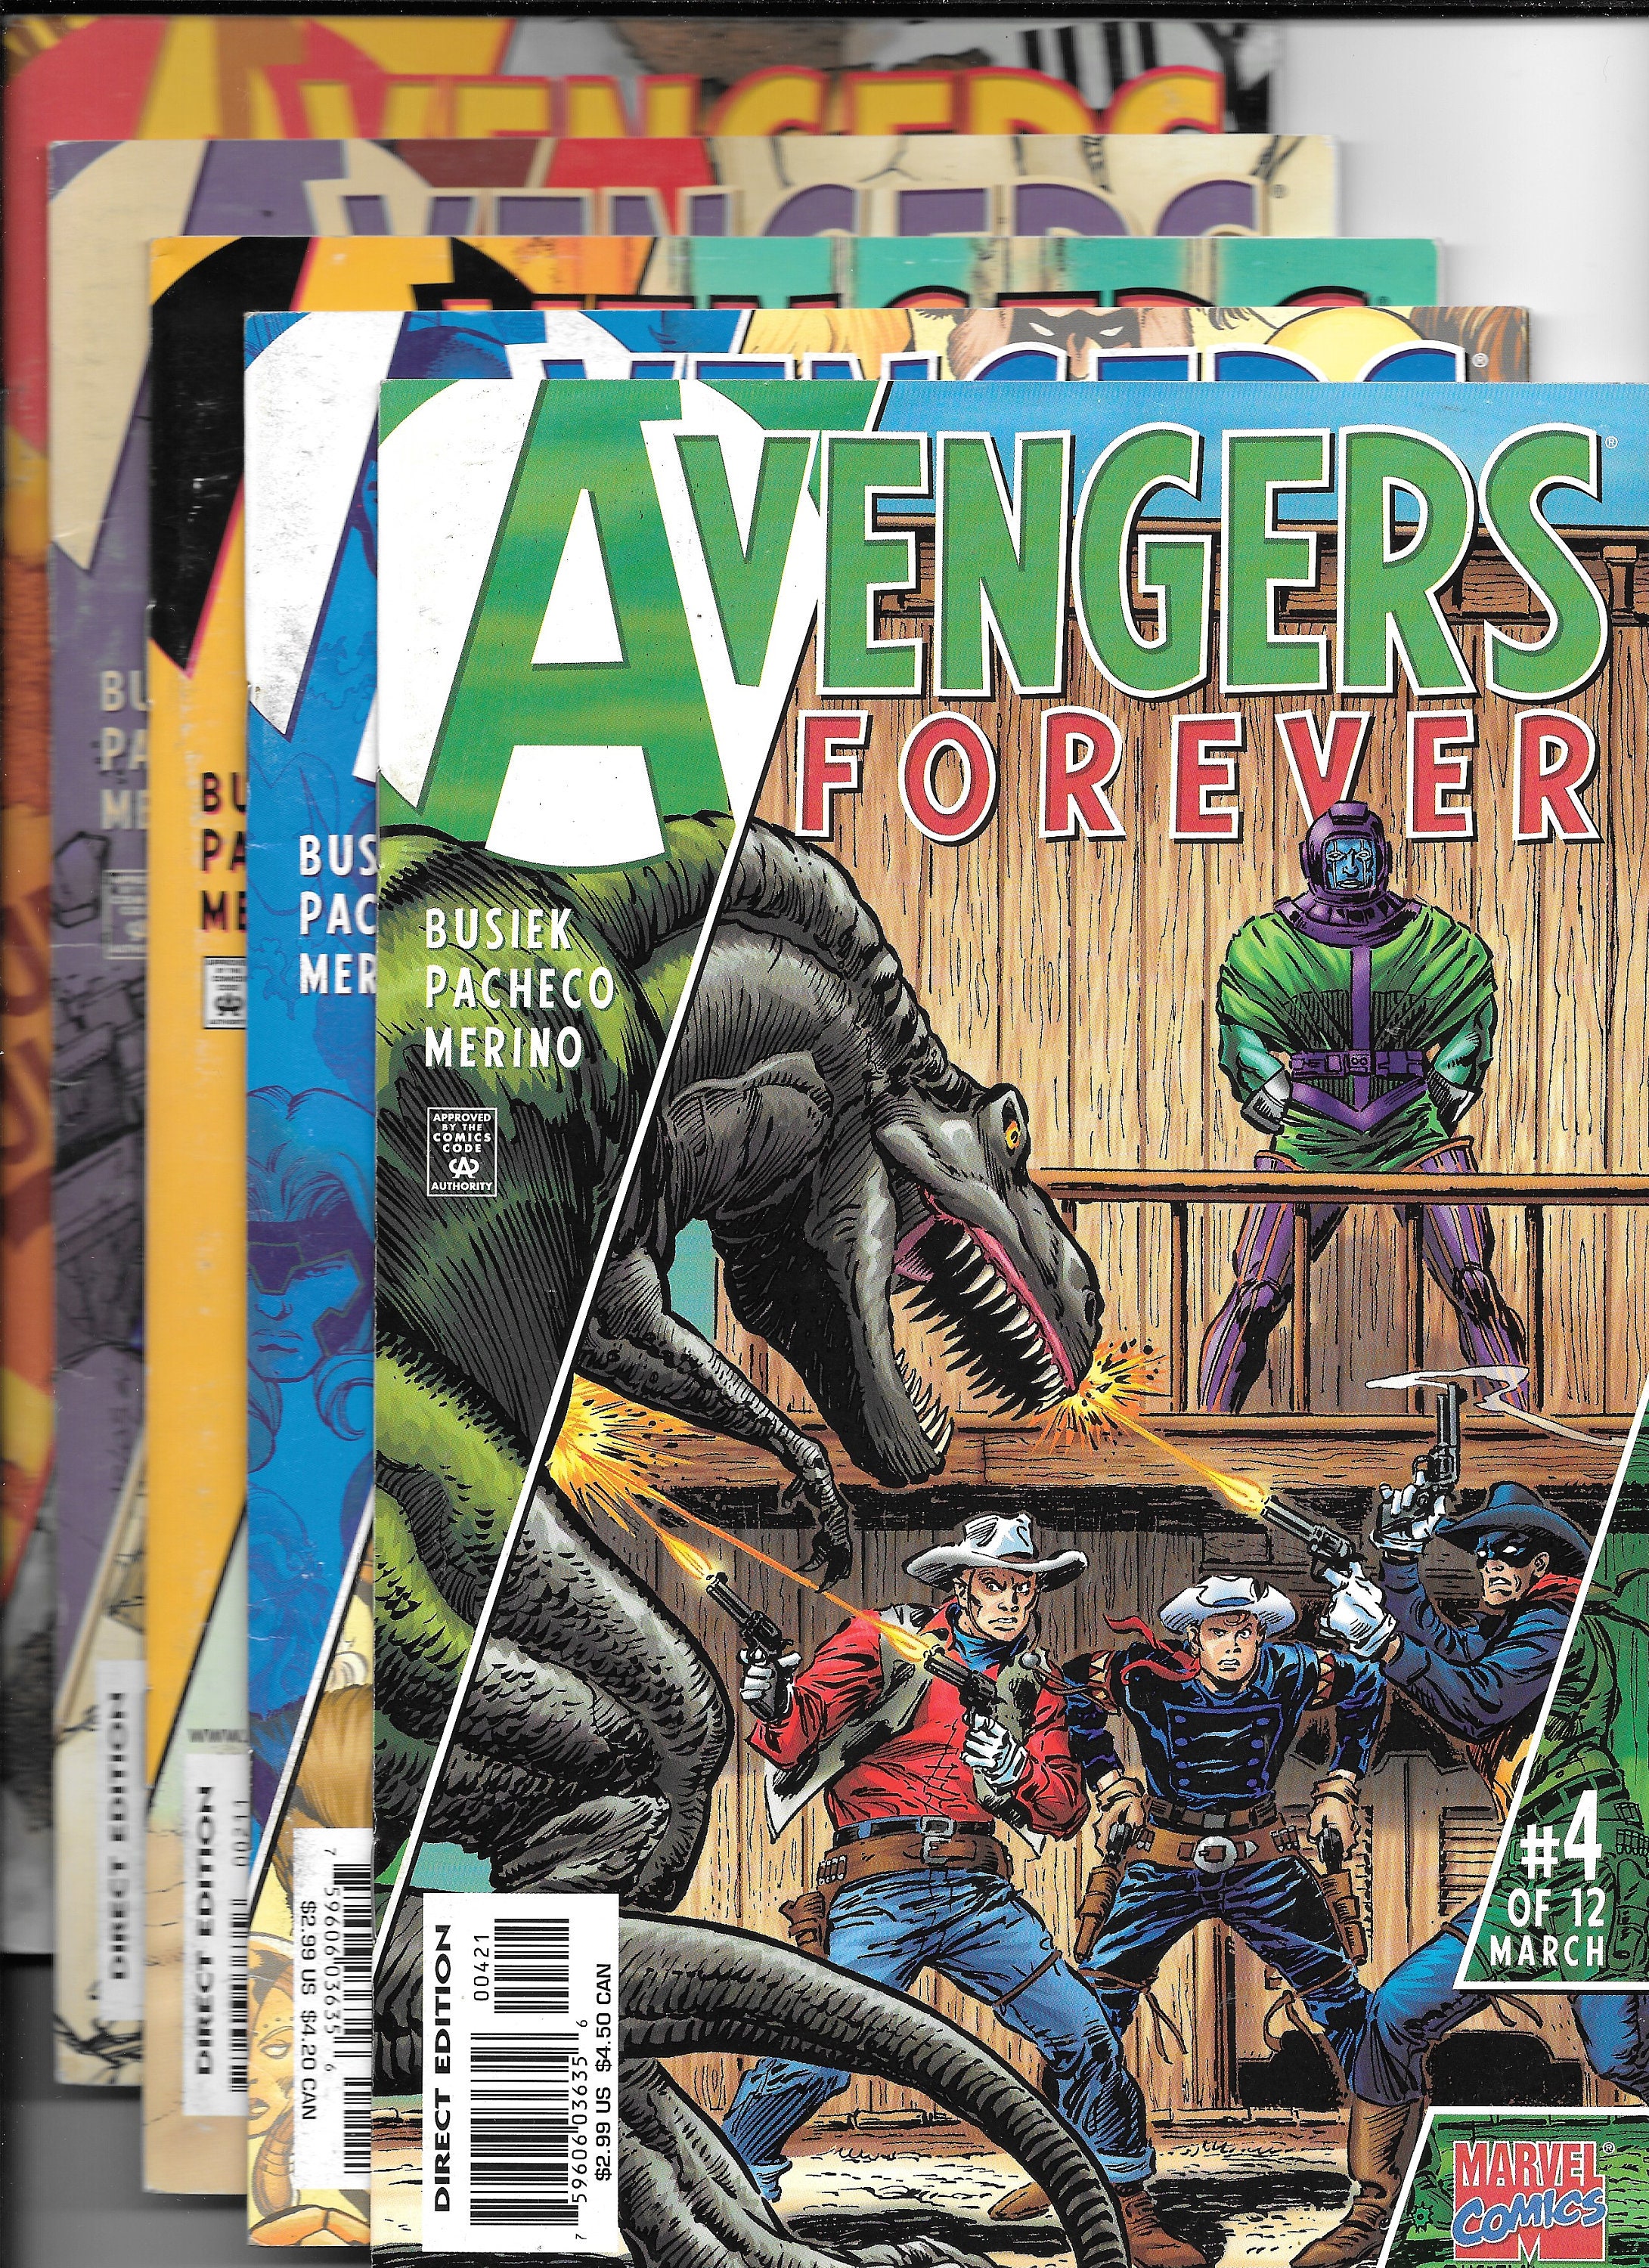 Kurt Busiek's Avengers – Avengers Assemble! Vol. 5 (The Kang